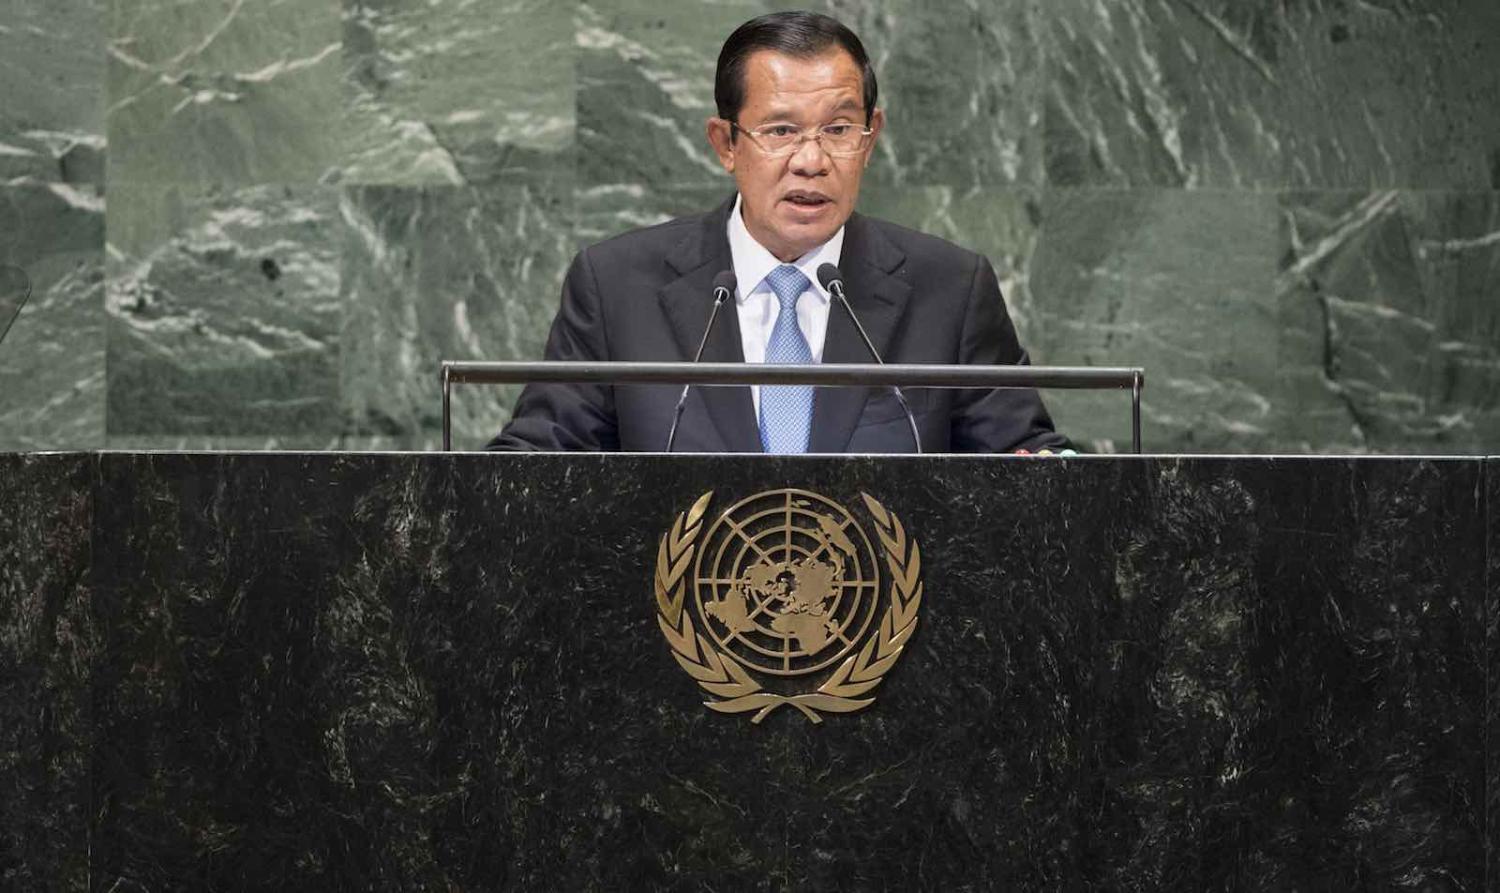 Cambodian Prime Minister Hun Sen at the UN General Assembly on 28 September, 2018 (Photo: Kim Haughton/UN Photo)